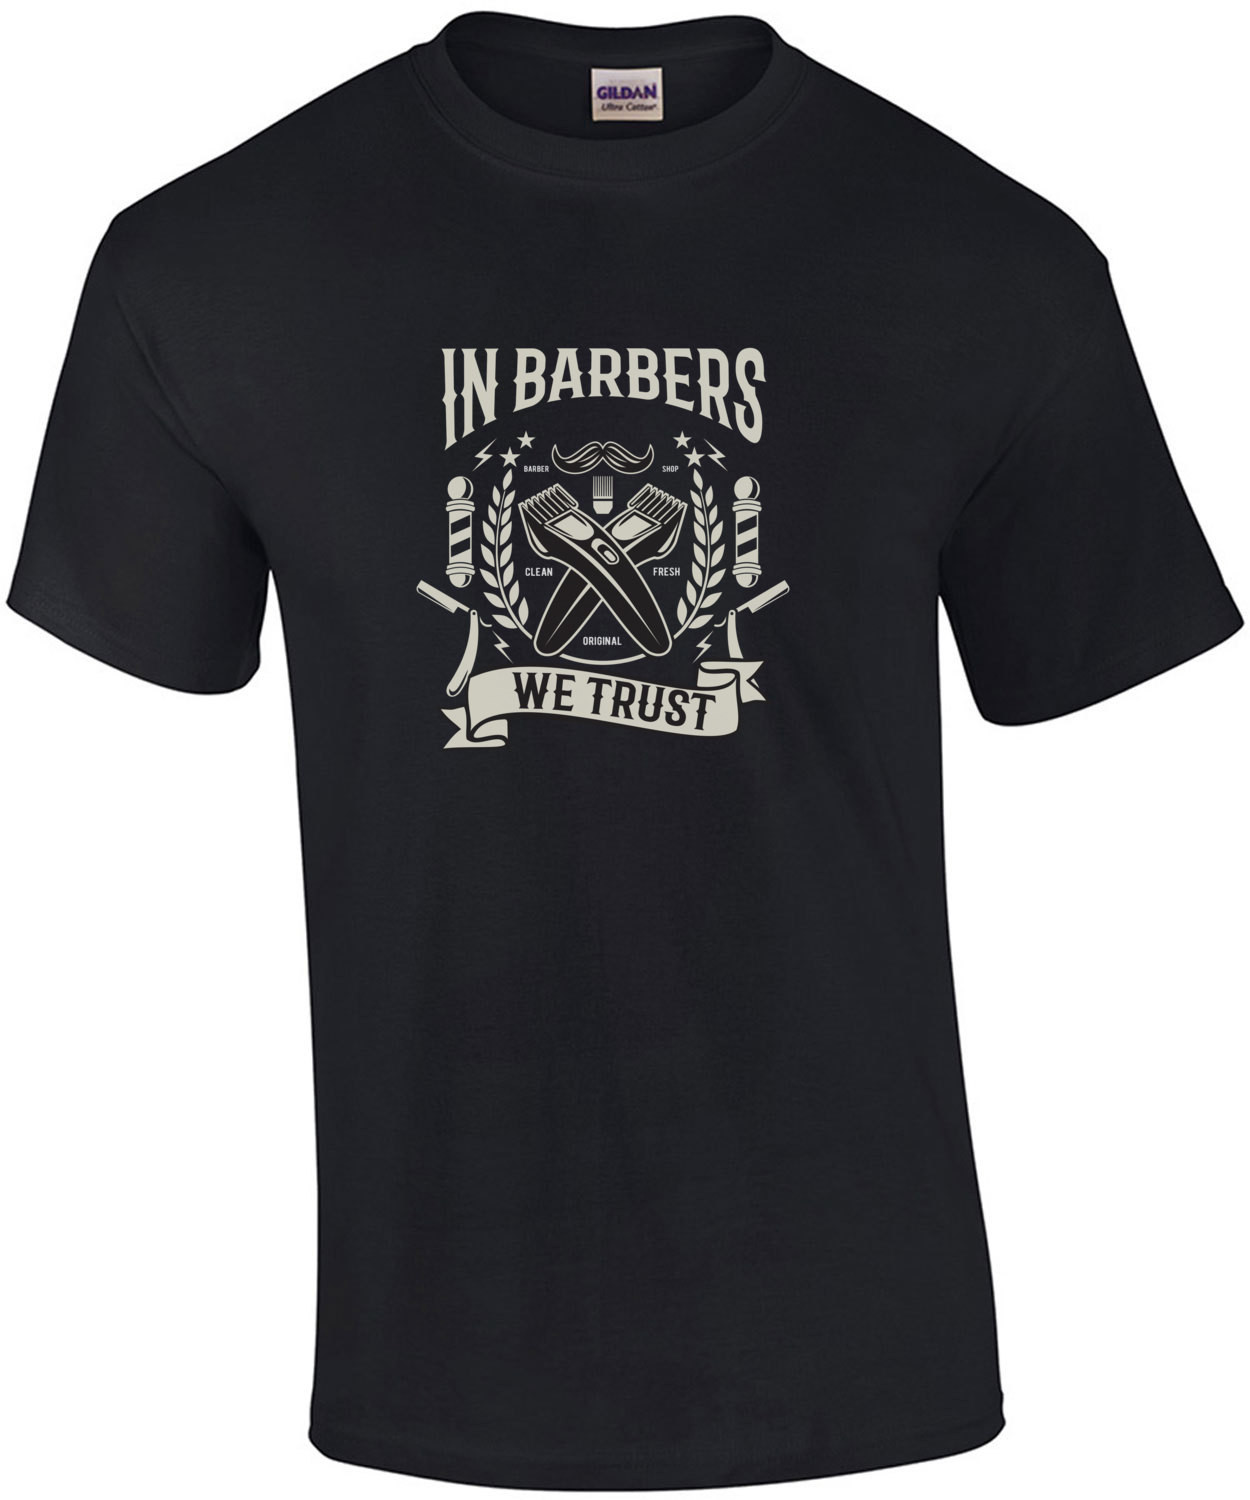 In Barbers We Trust T-Shirt